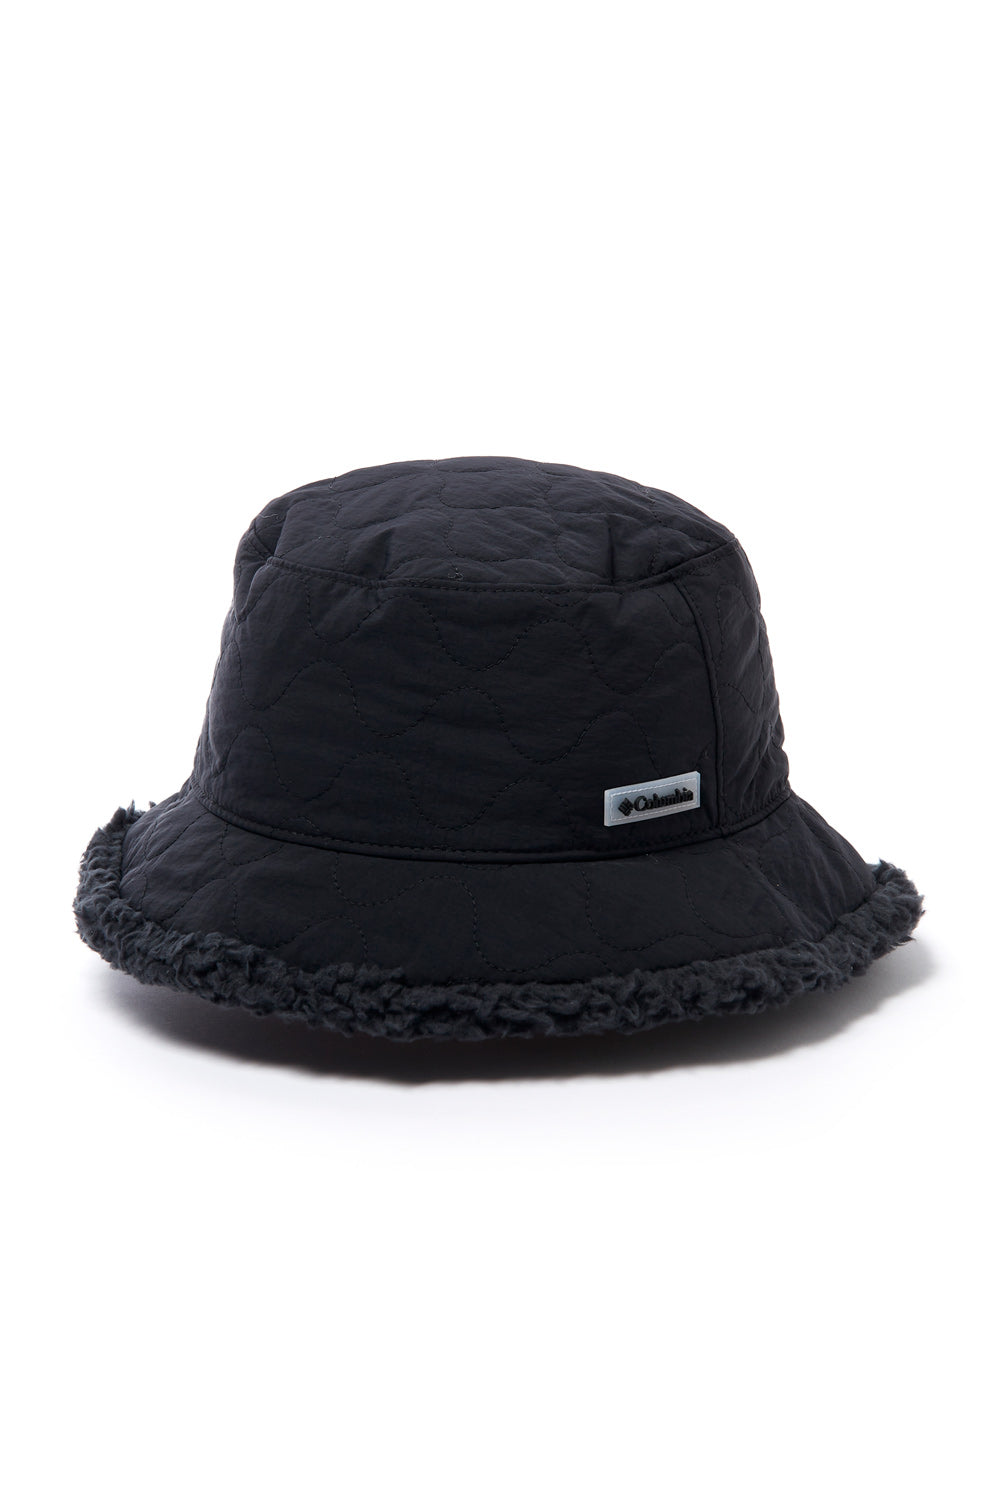 Columbia Winter Pass Reversible Bucket Hat - Black/Black - L/XL